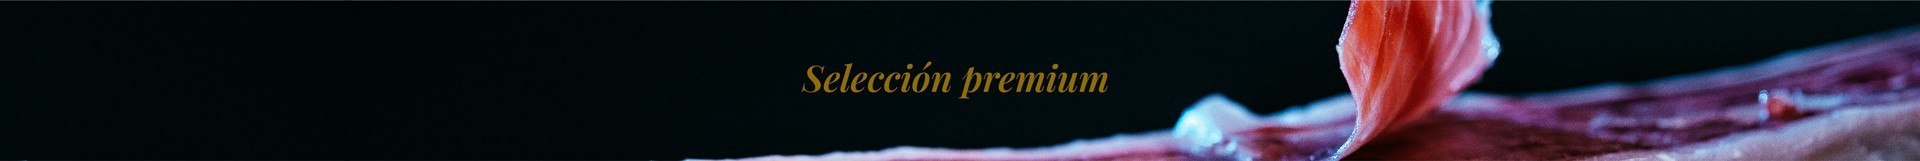 Premium selection | Ibericca